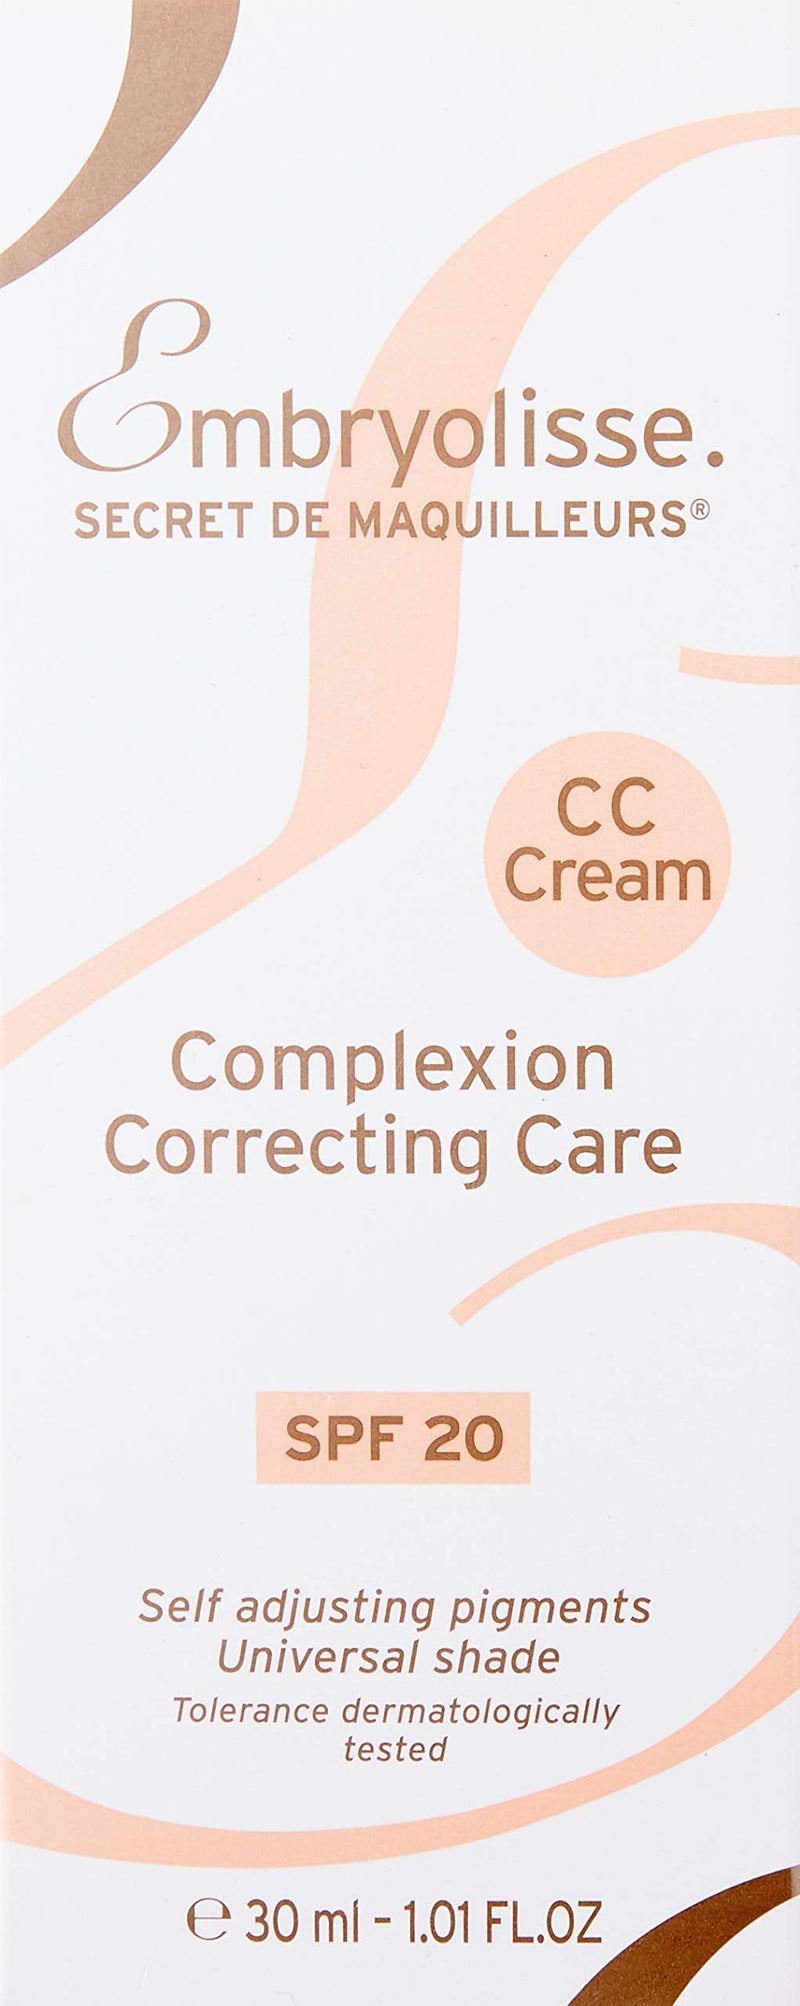 [Australia] - Embryolisse Artist Secret Complexion Correcting Care CC Cream SPF20 30 ml 